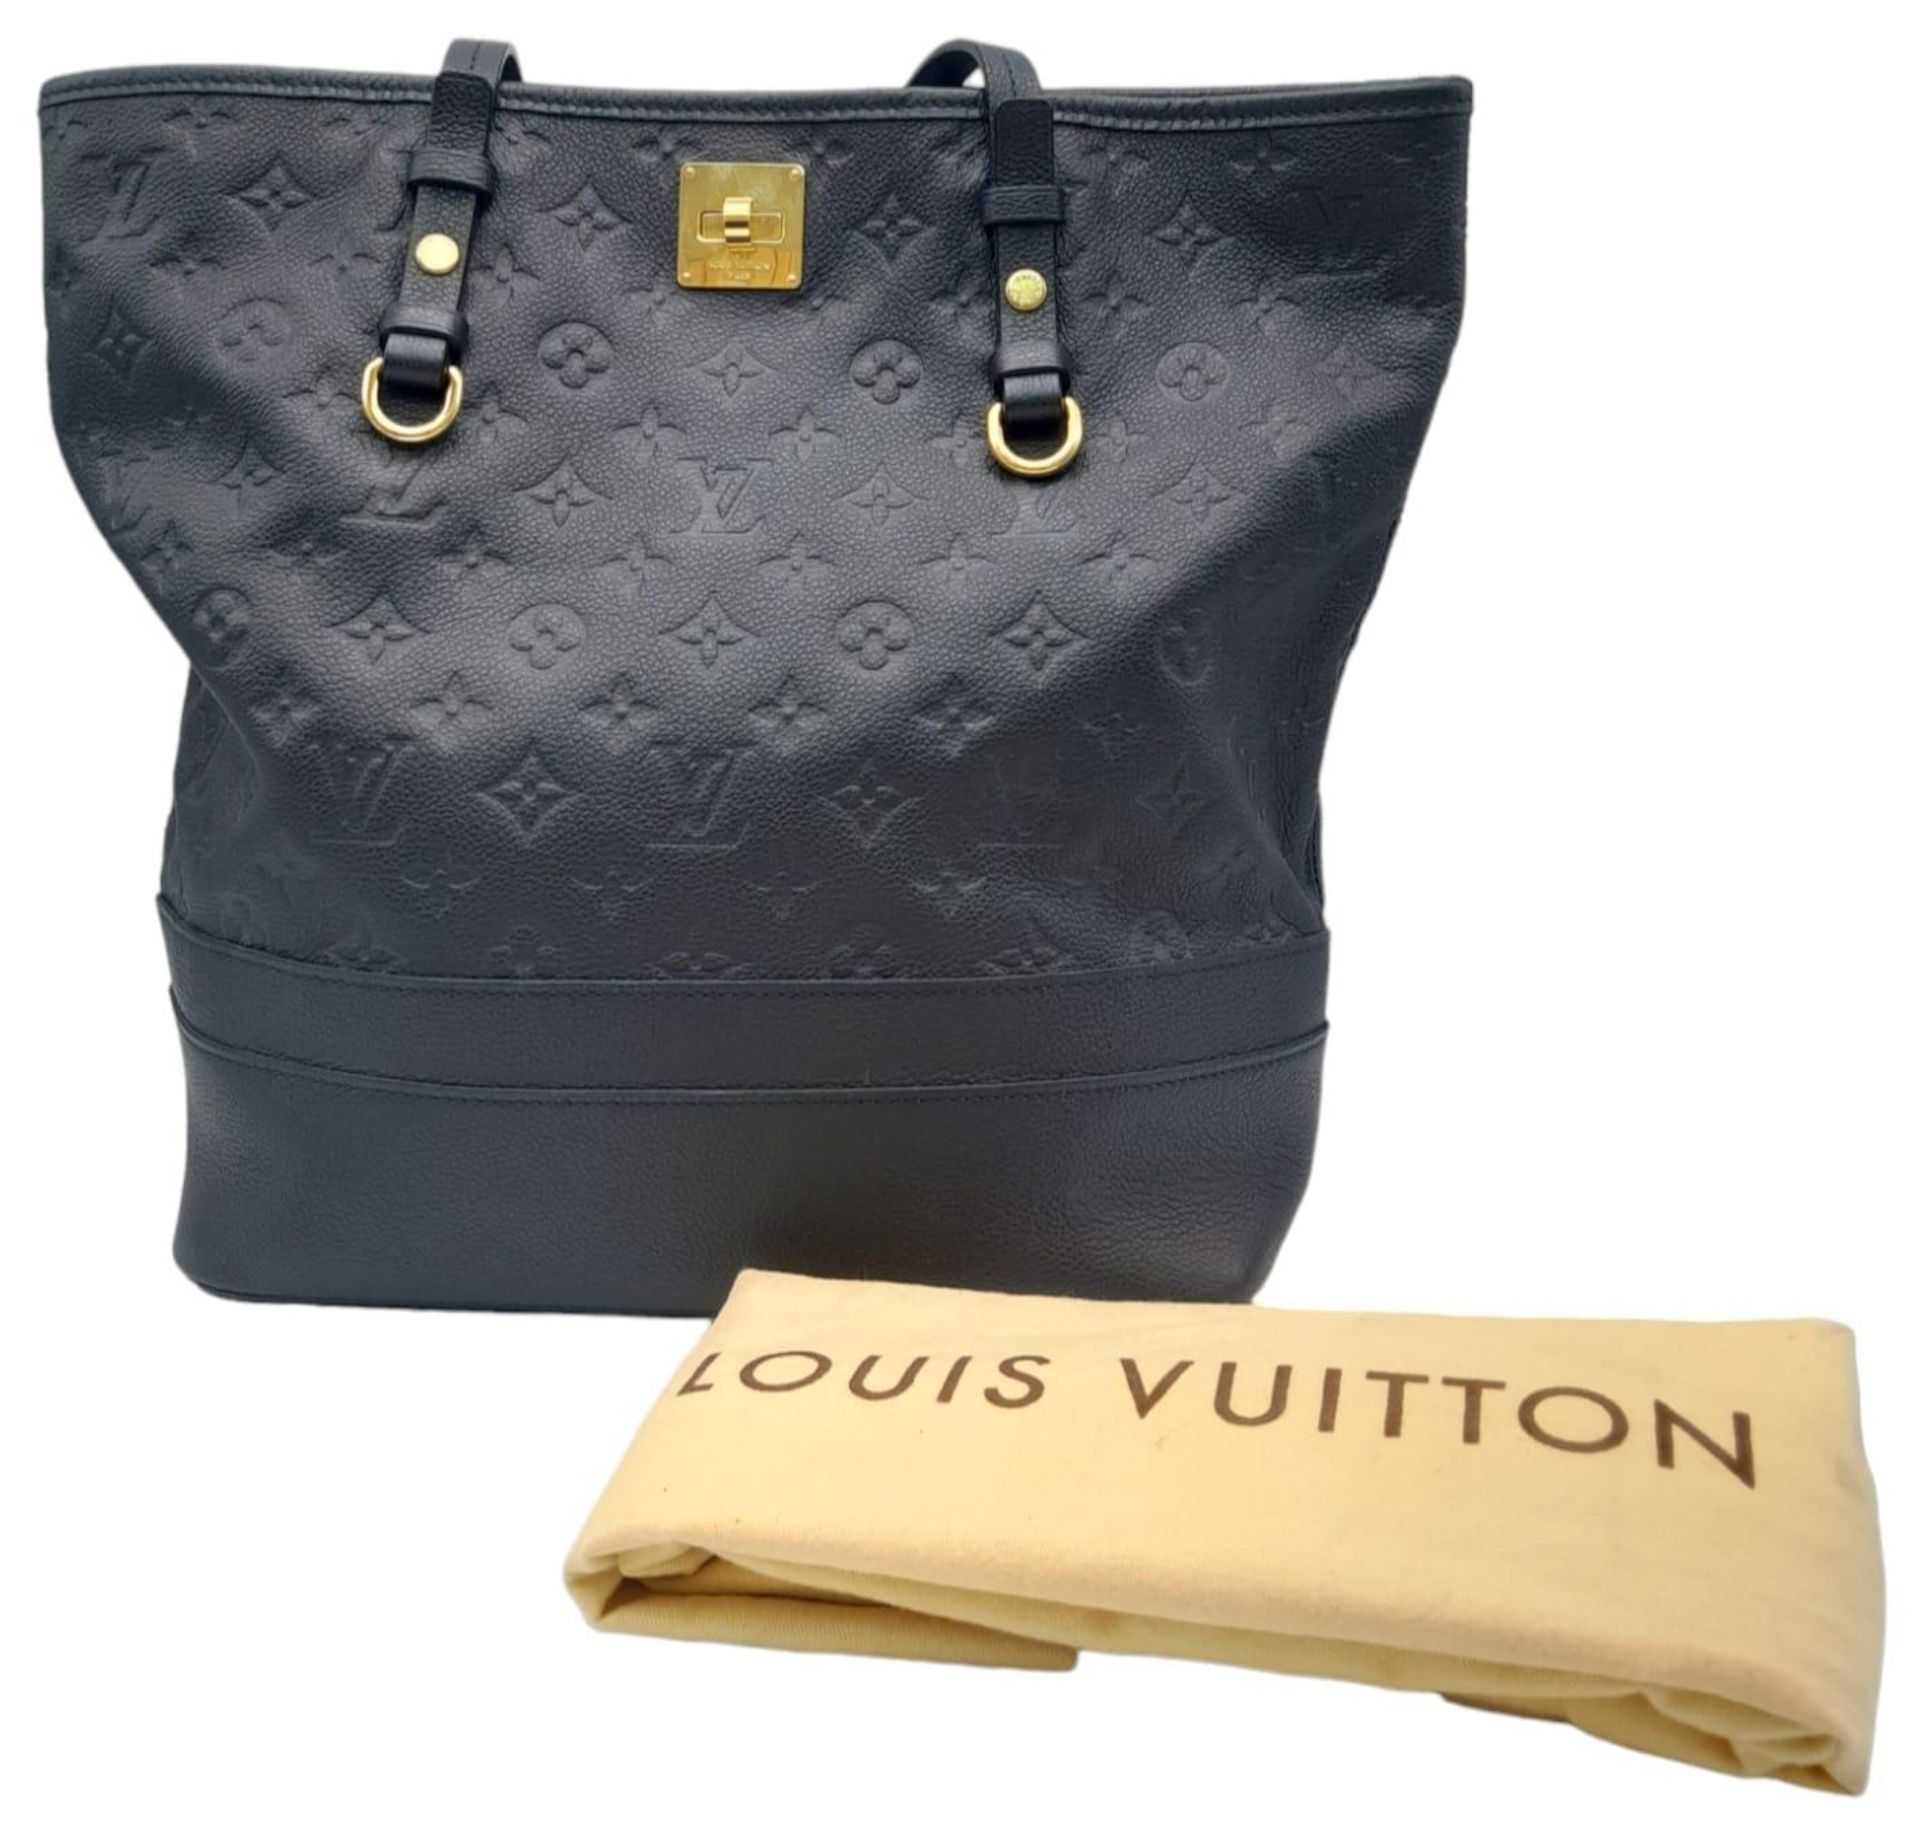 A Louis Vuitton Monogram Empreinte PM Tote Bag. Navy blue exterior with gold tone hardware. Spacious